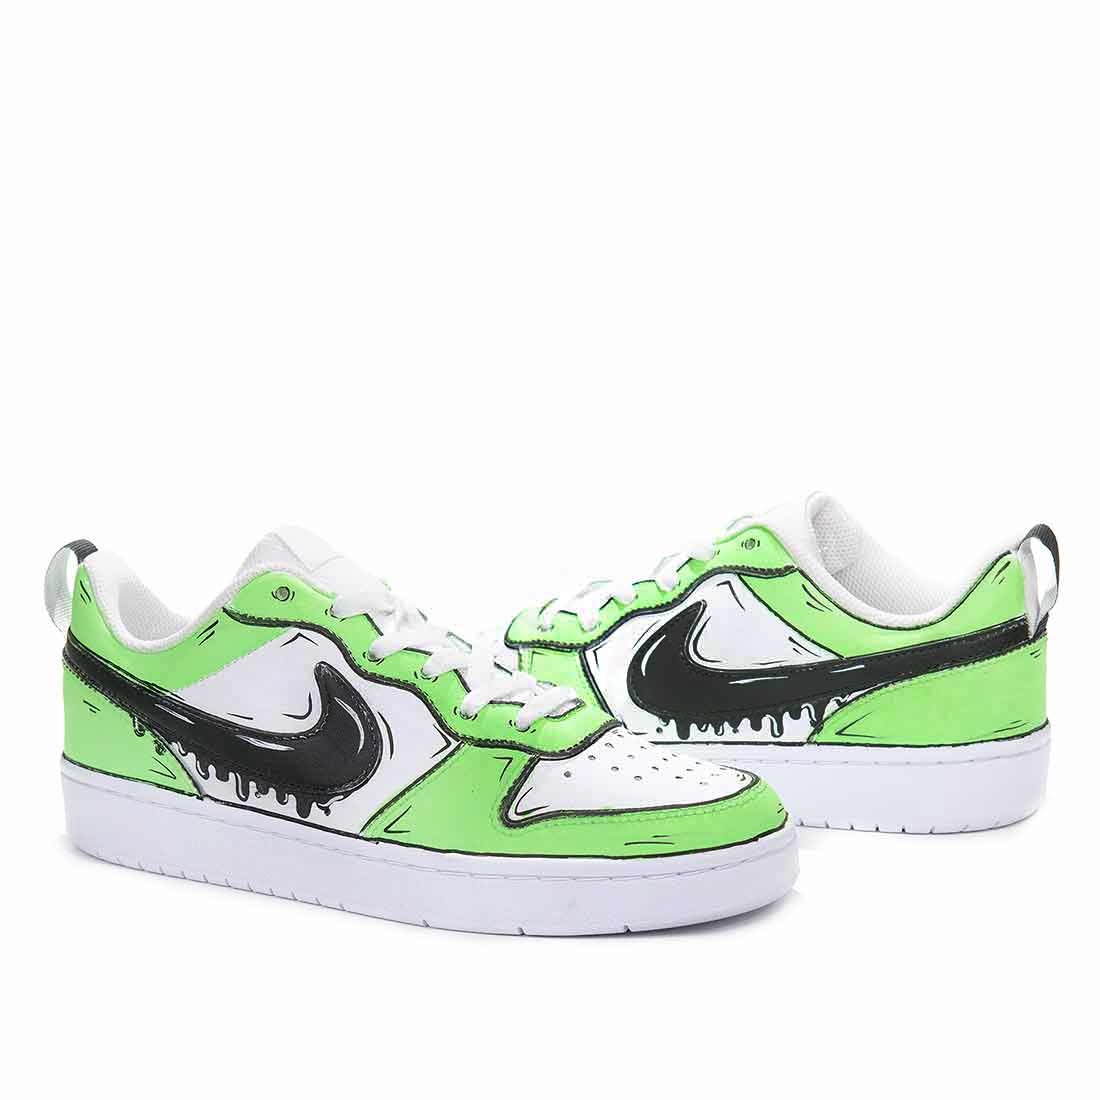 scarpe nike basse dipinte a mano effetto cartoon verde fluo